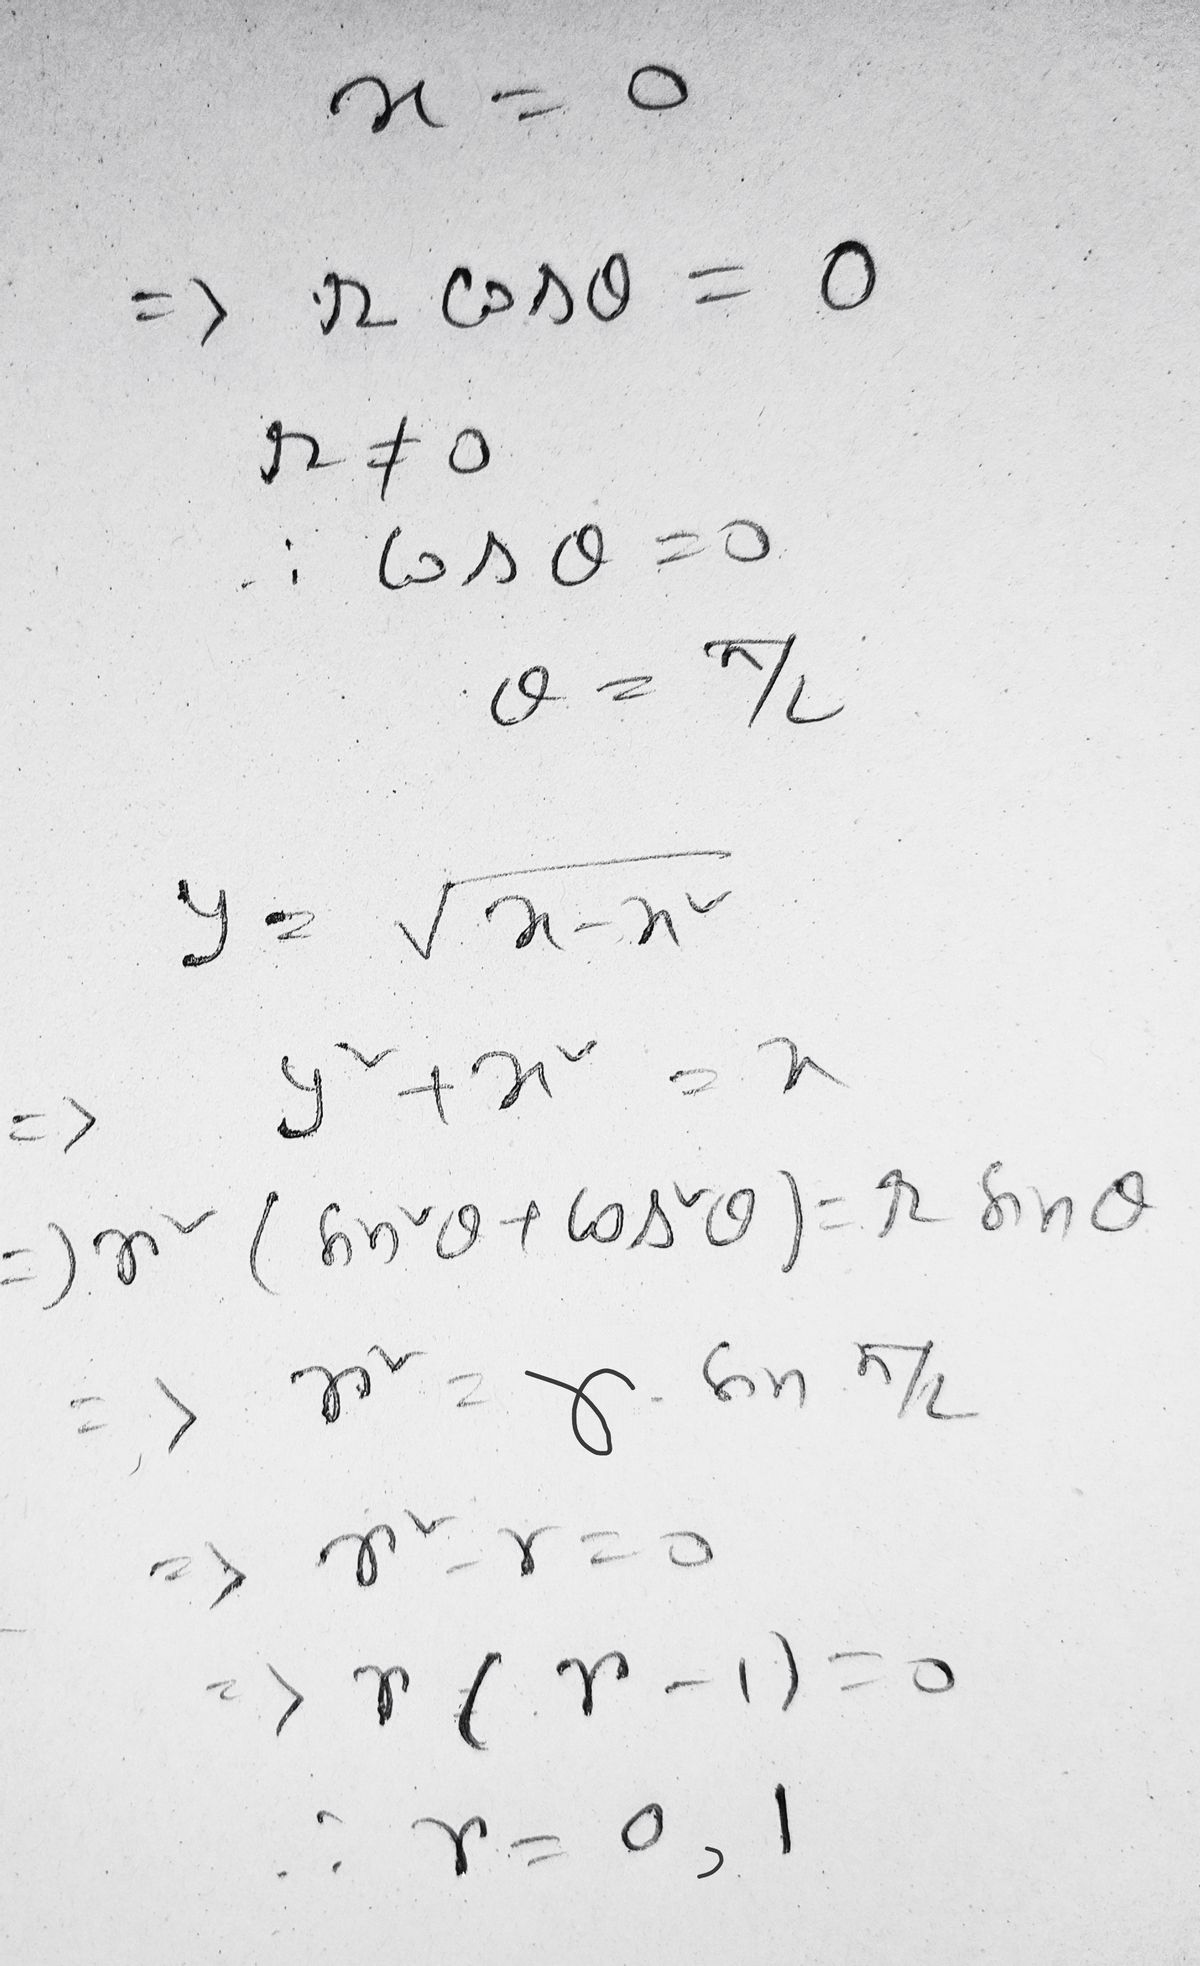 Advanced Math homework question answer, step 1, image 2